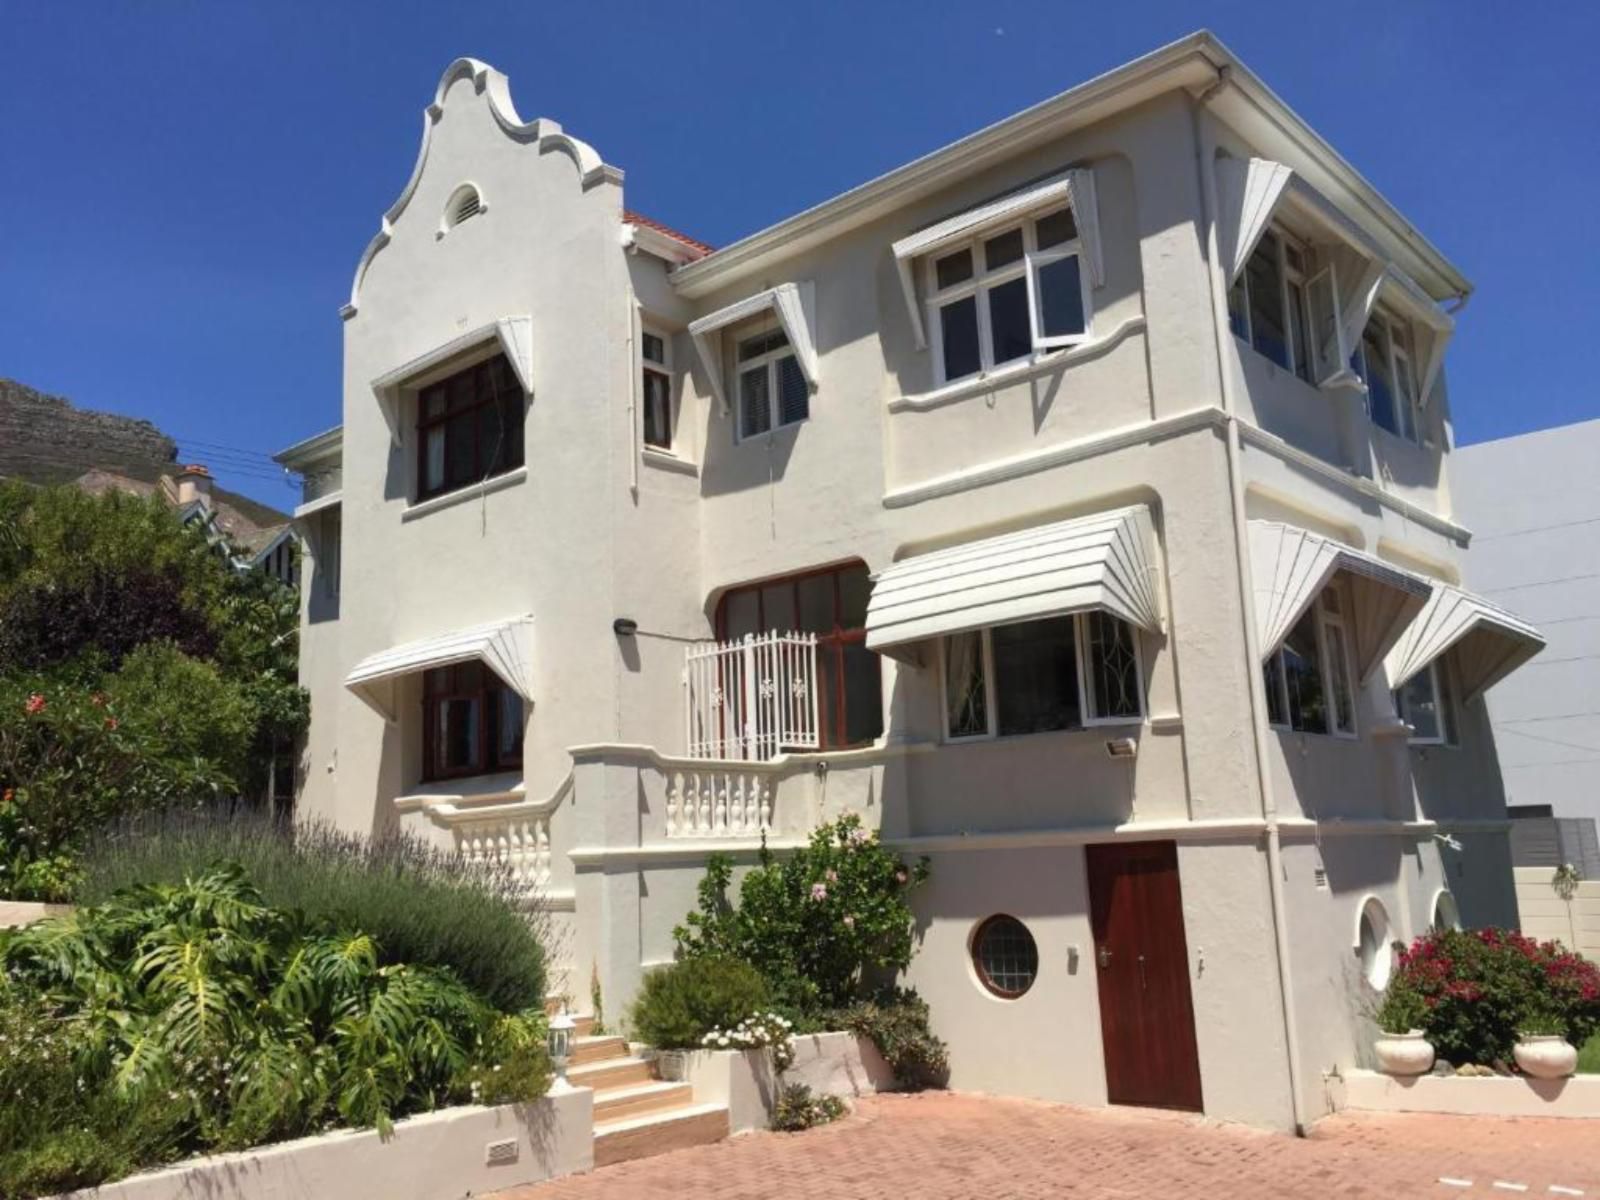 Villa Zeezicht Gardens Cape Town Western Cape South Africa Complementary Colors, Balcony, Architecture, Building, House